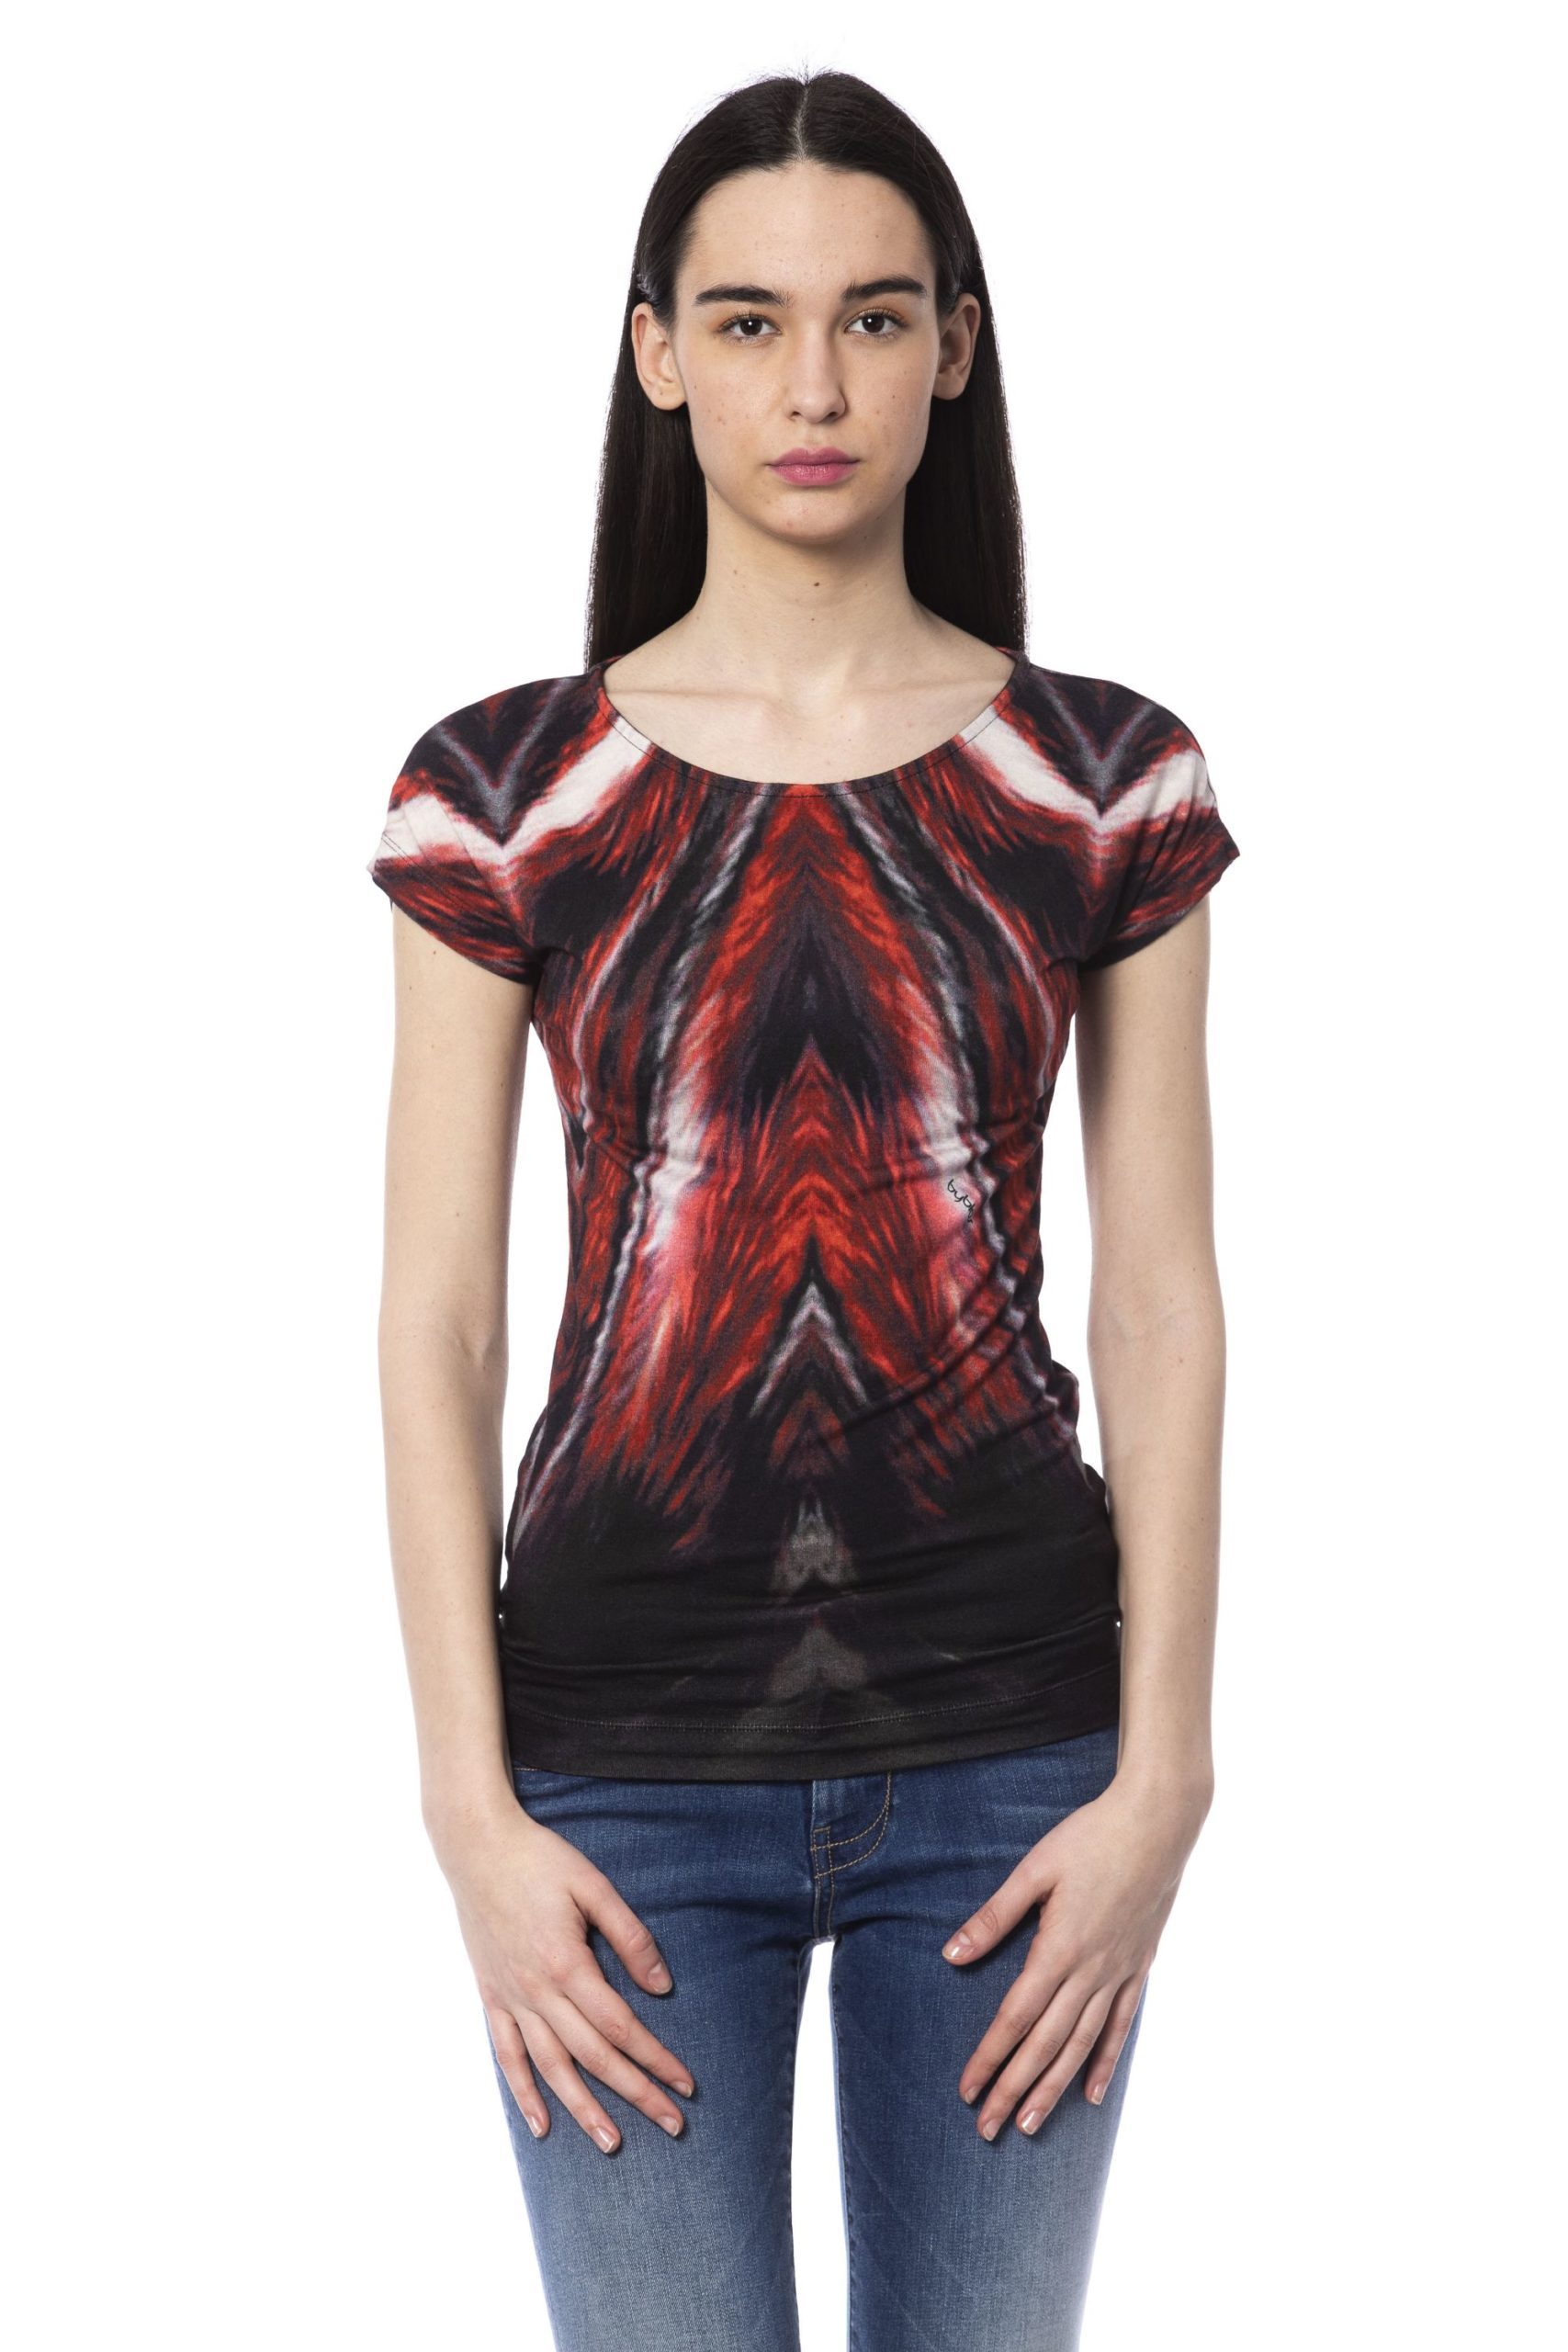 BYBLOS Women's T-Shirt Multicolor BY1234703 - XS